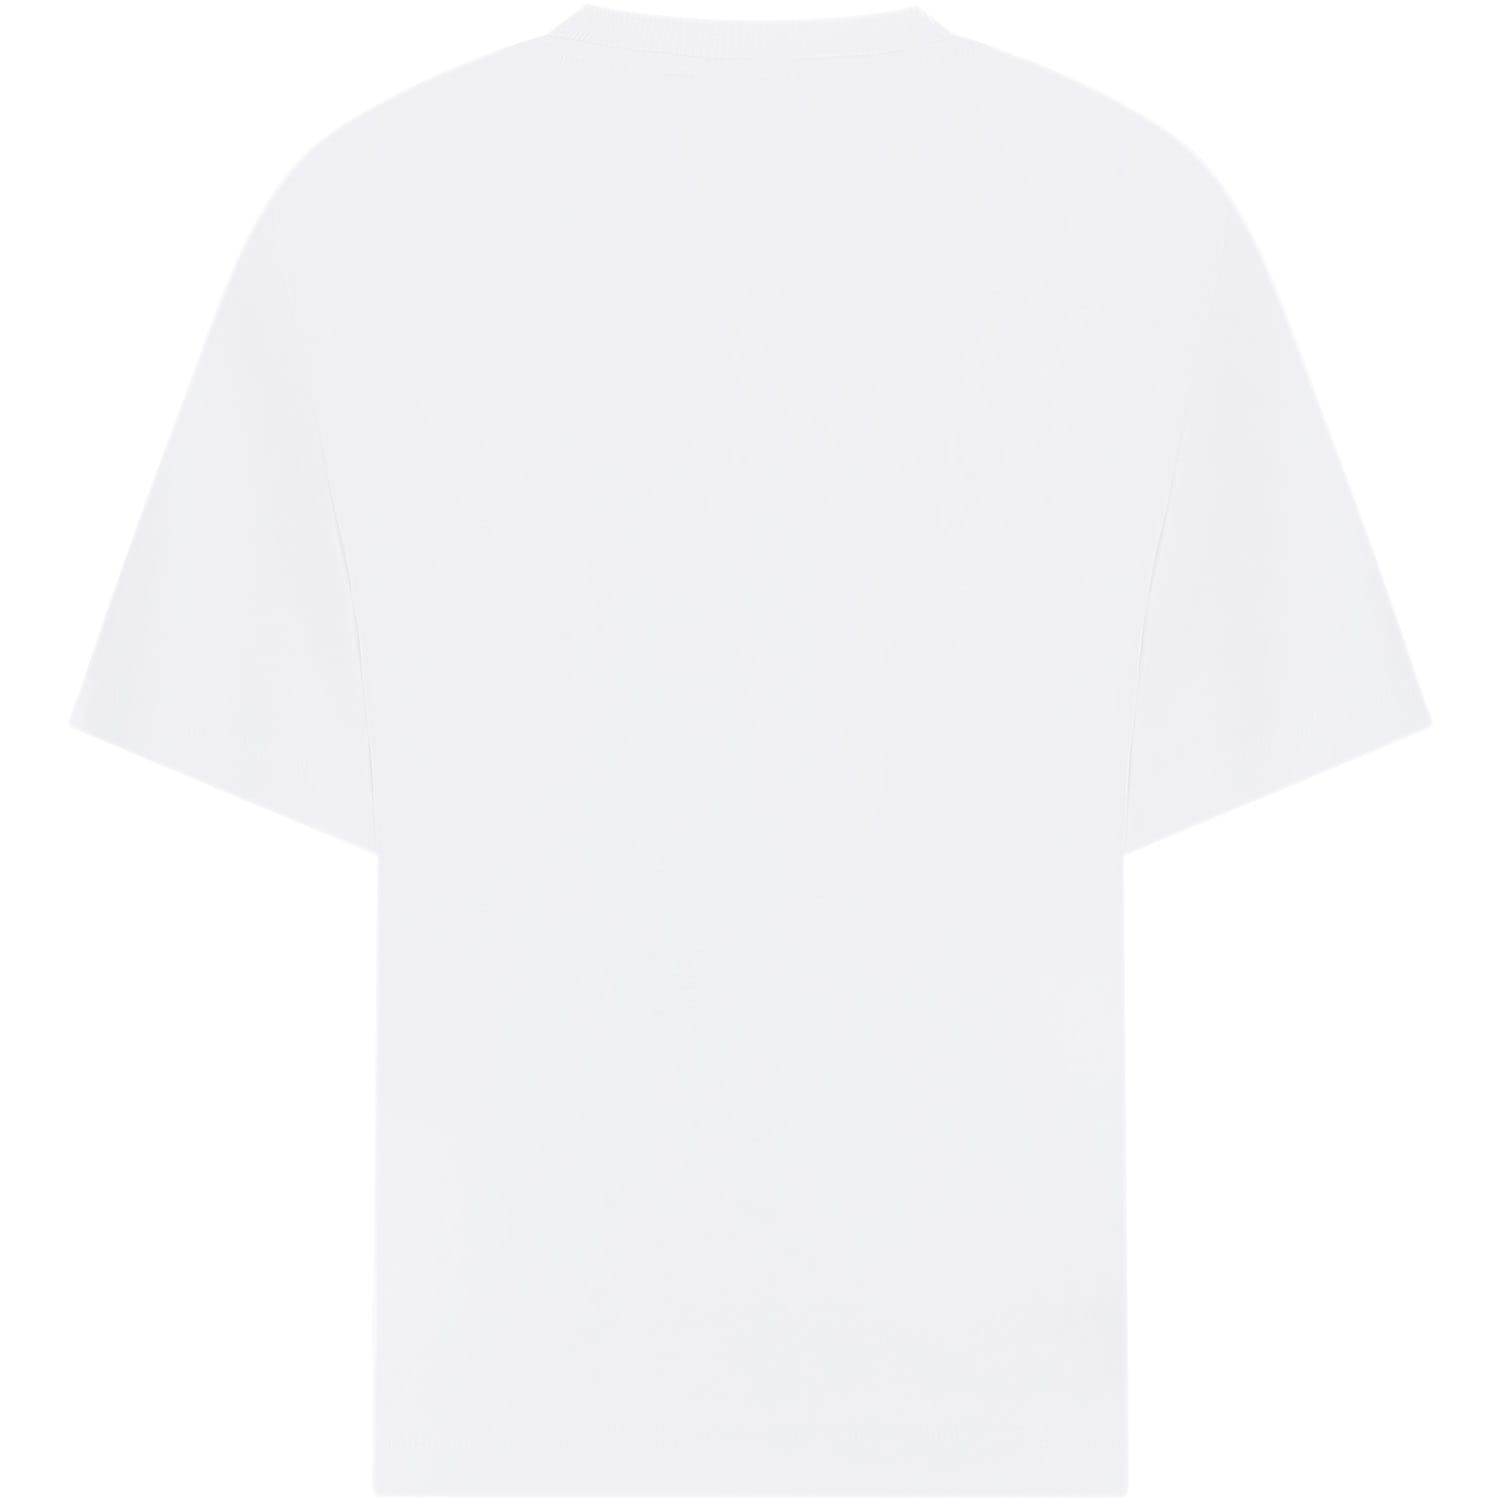 Shop Armani Collezioni White T-shirt For Boy With Smurf Print